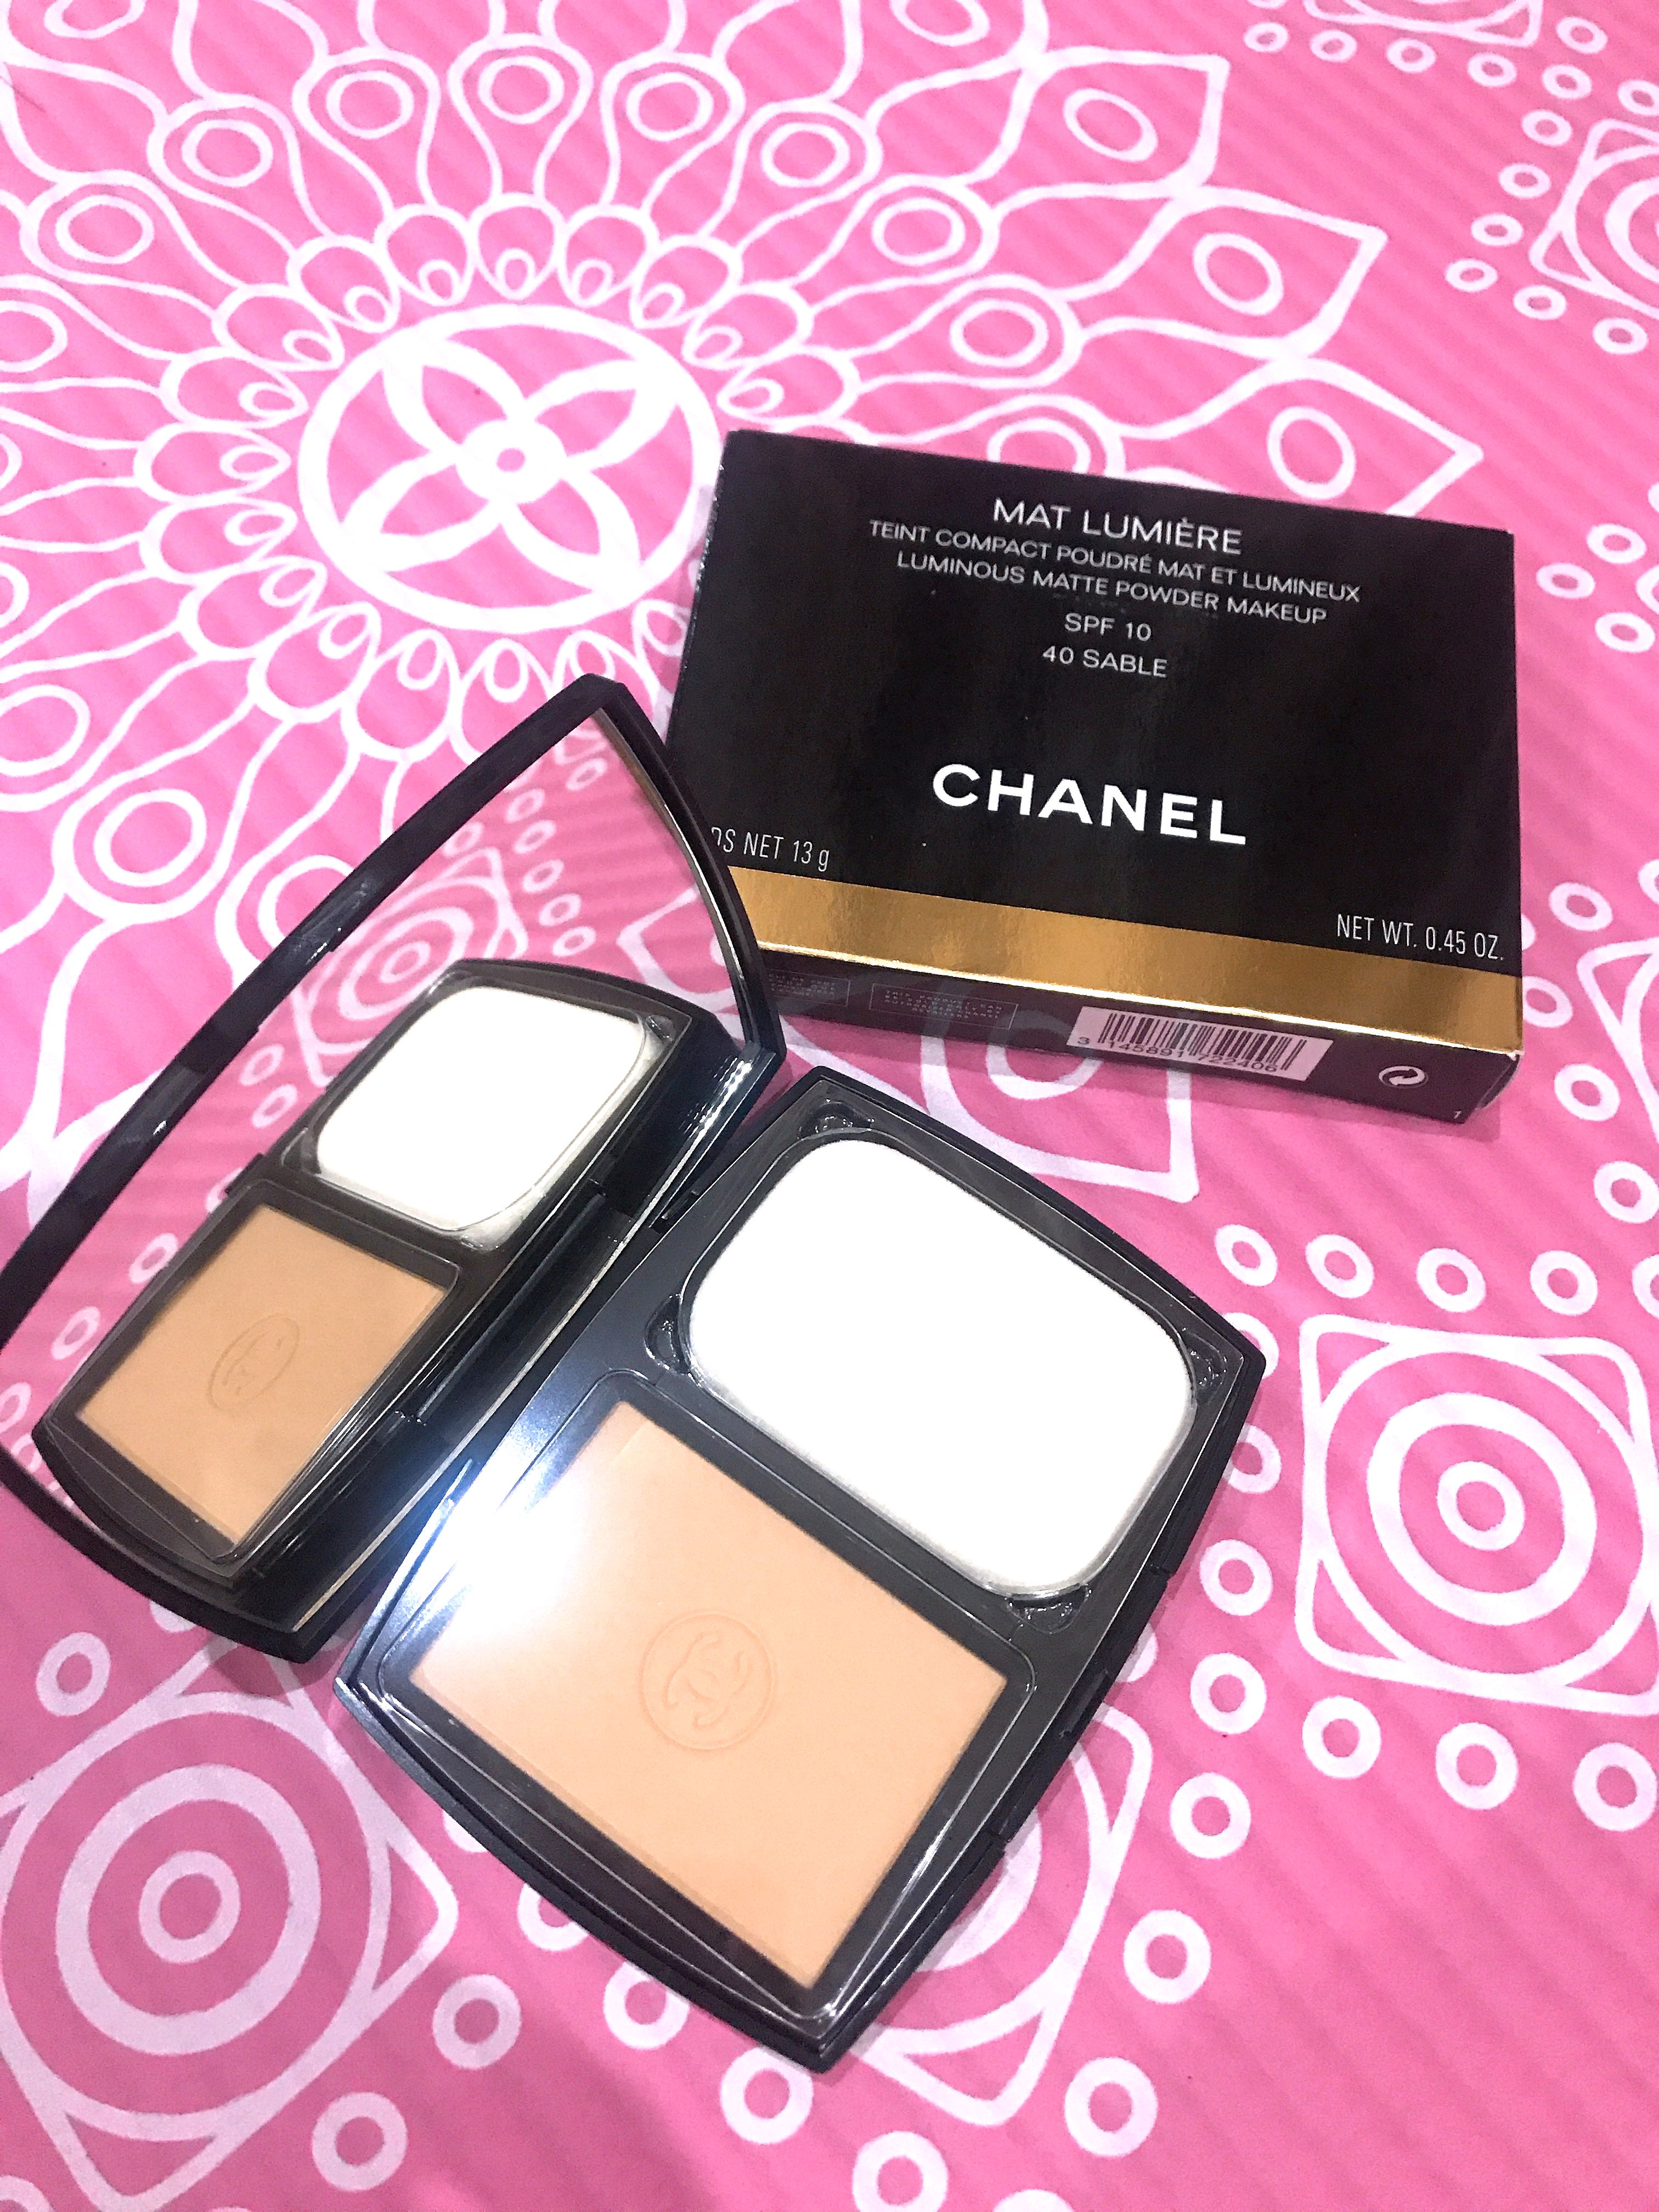 Chanel Mat Lumiere Luminous Matte Powder Makeup SPF10 - # 80 Contour  13g/0.45oz 